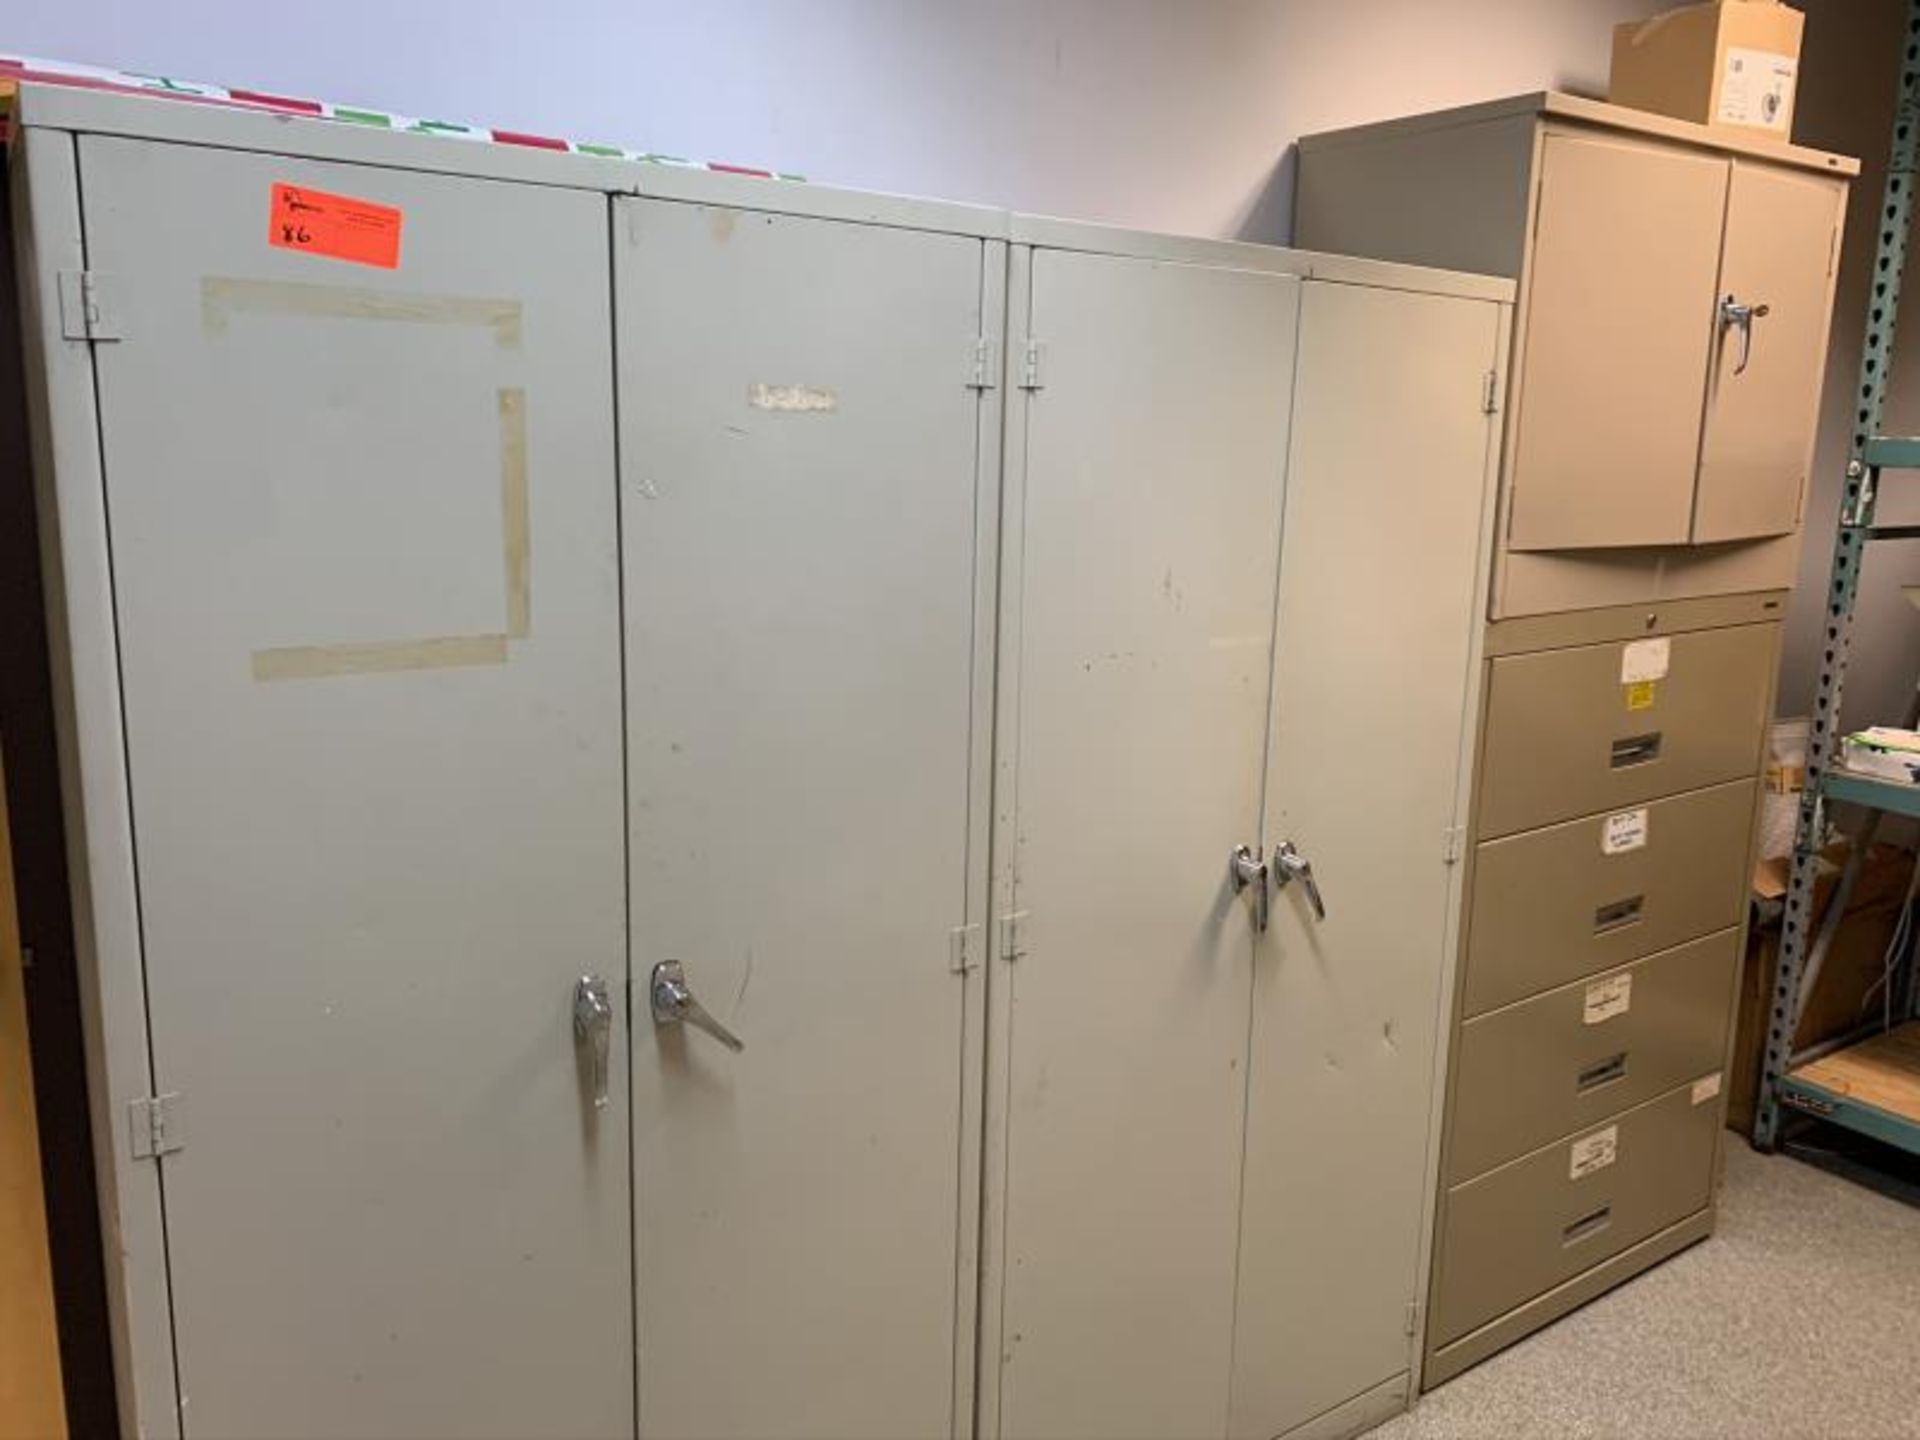 2 Metal Cabinets; 1 horizontal filing cabinet, 1 half size metal cabinet